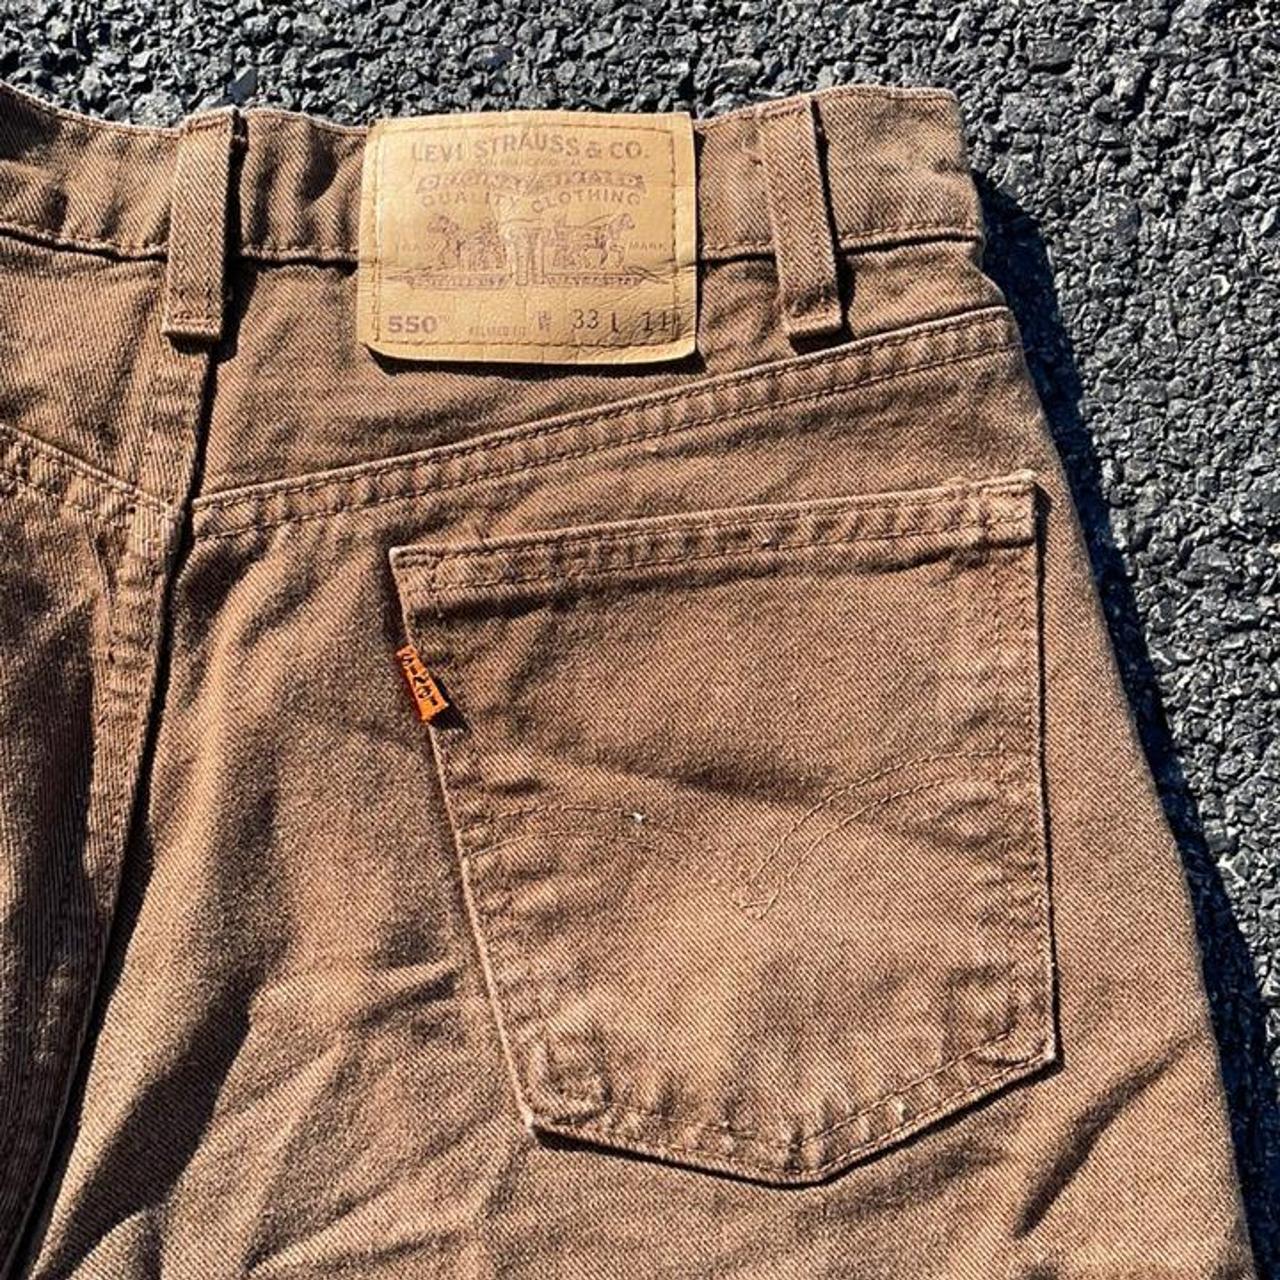 Product Image 2 - Vintage Levi’s 550 jean shorts